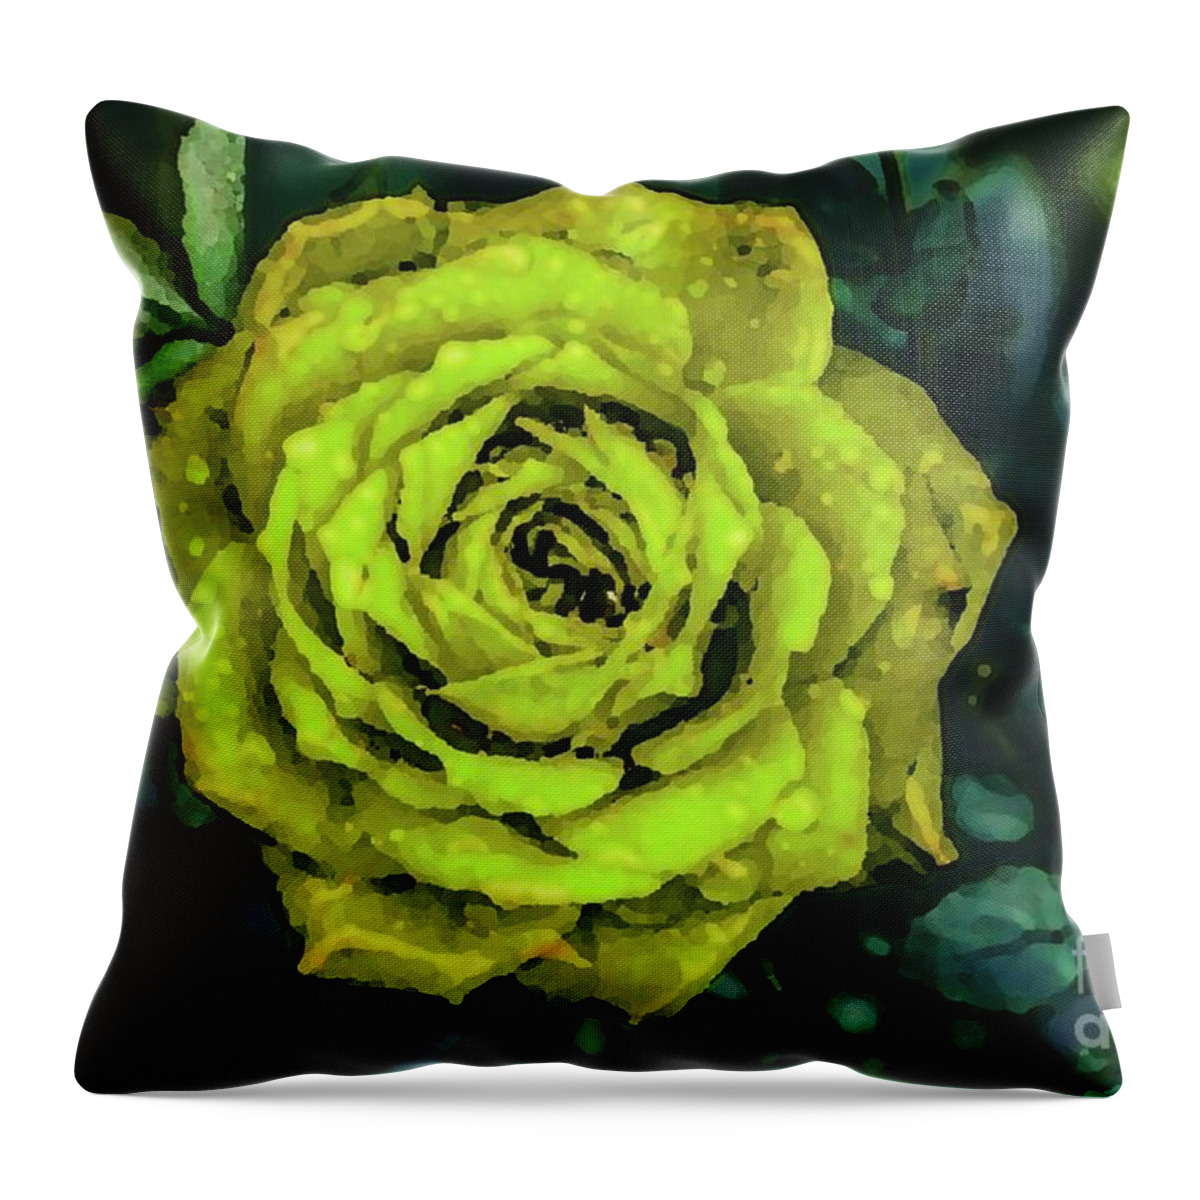 Yellow Rose Throw Pillow featuring the digital art Golden Night Rose by Bill King